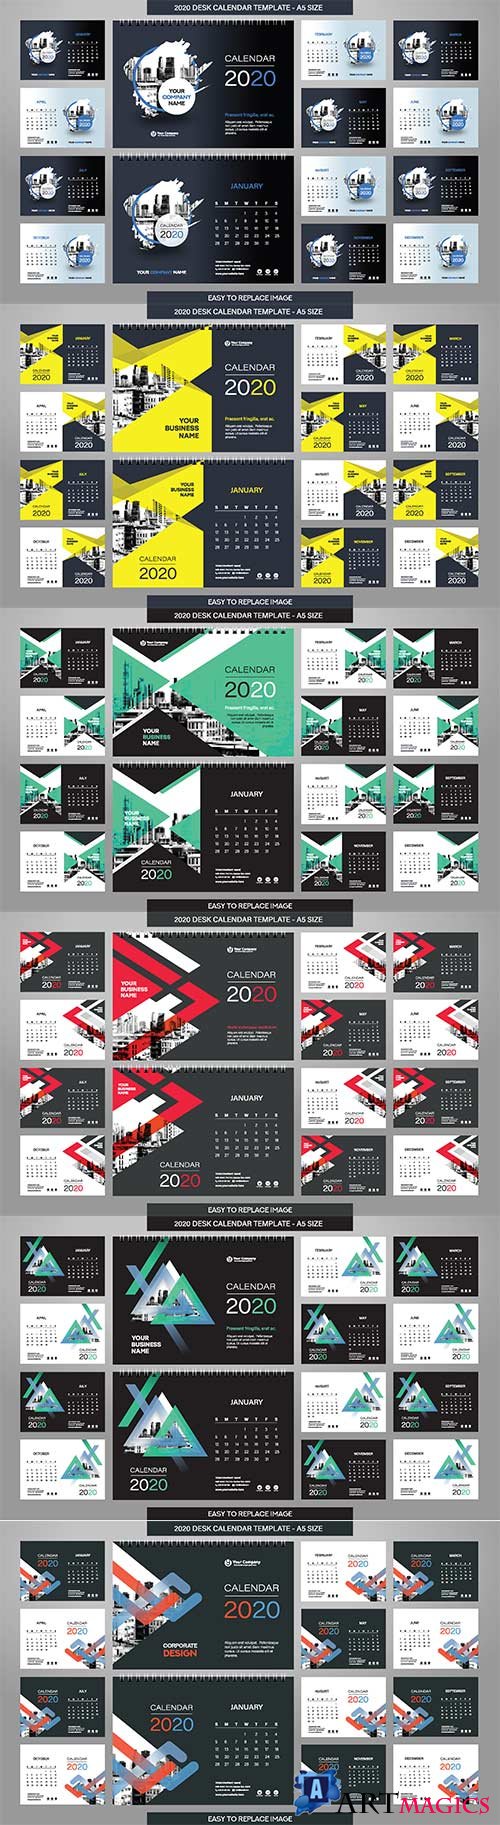 Desk Calendar 2020 template - 12 months included - A5